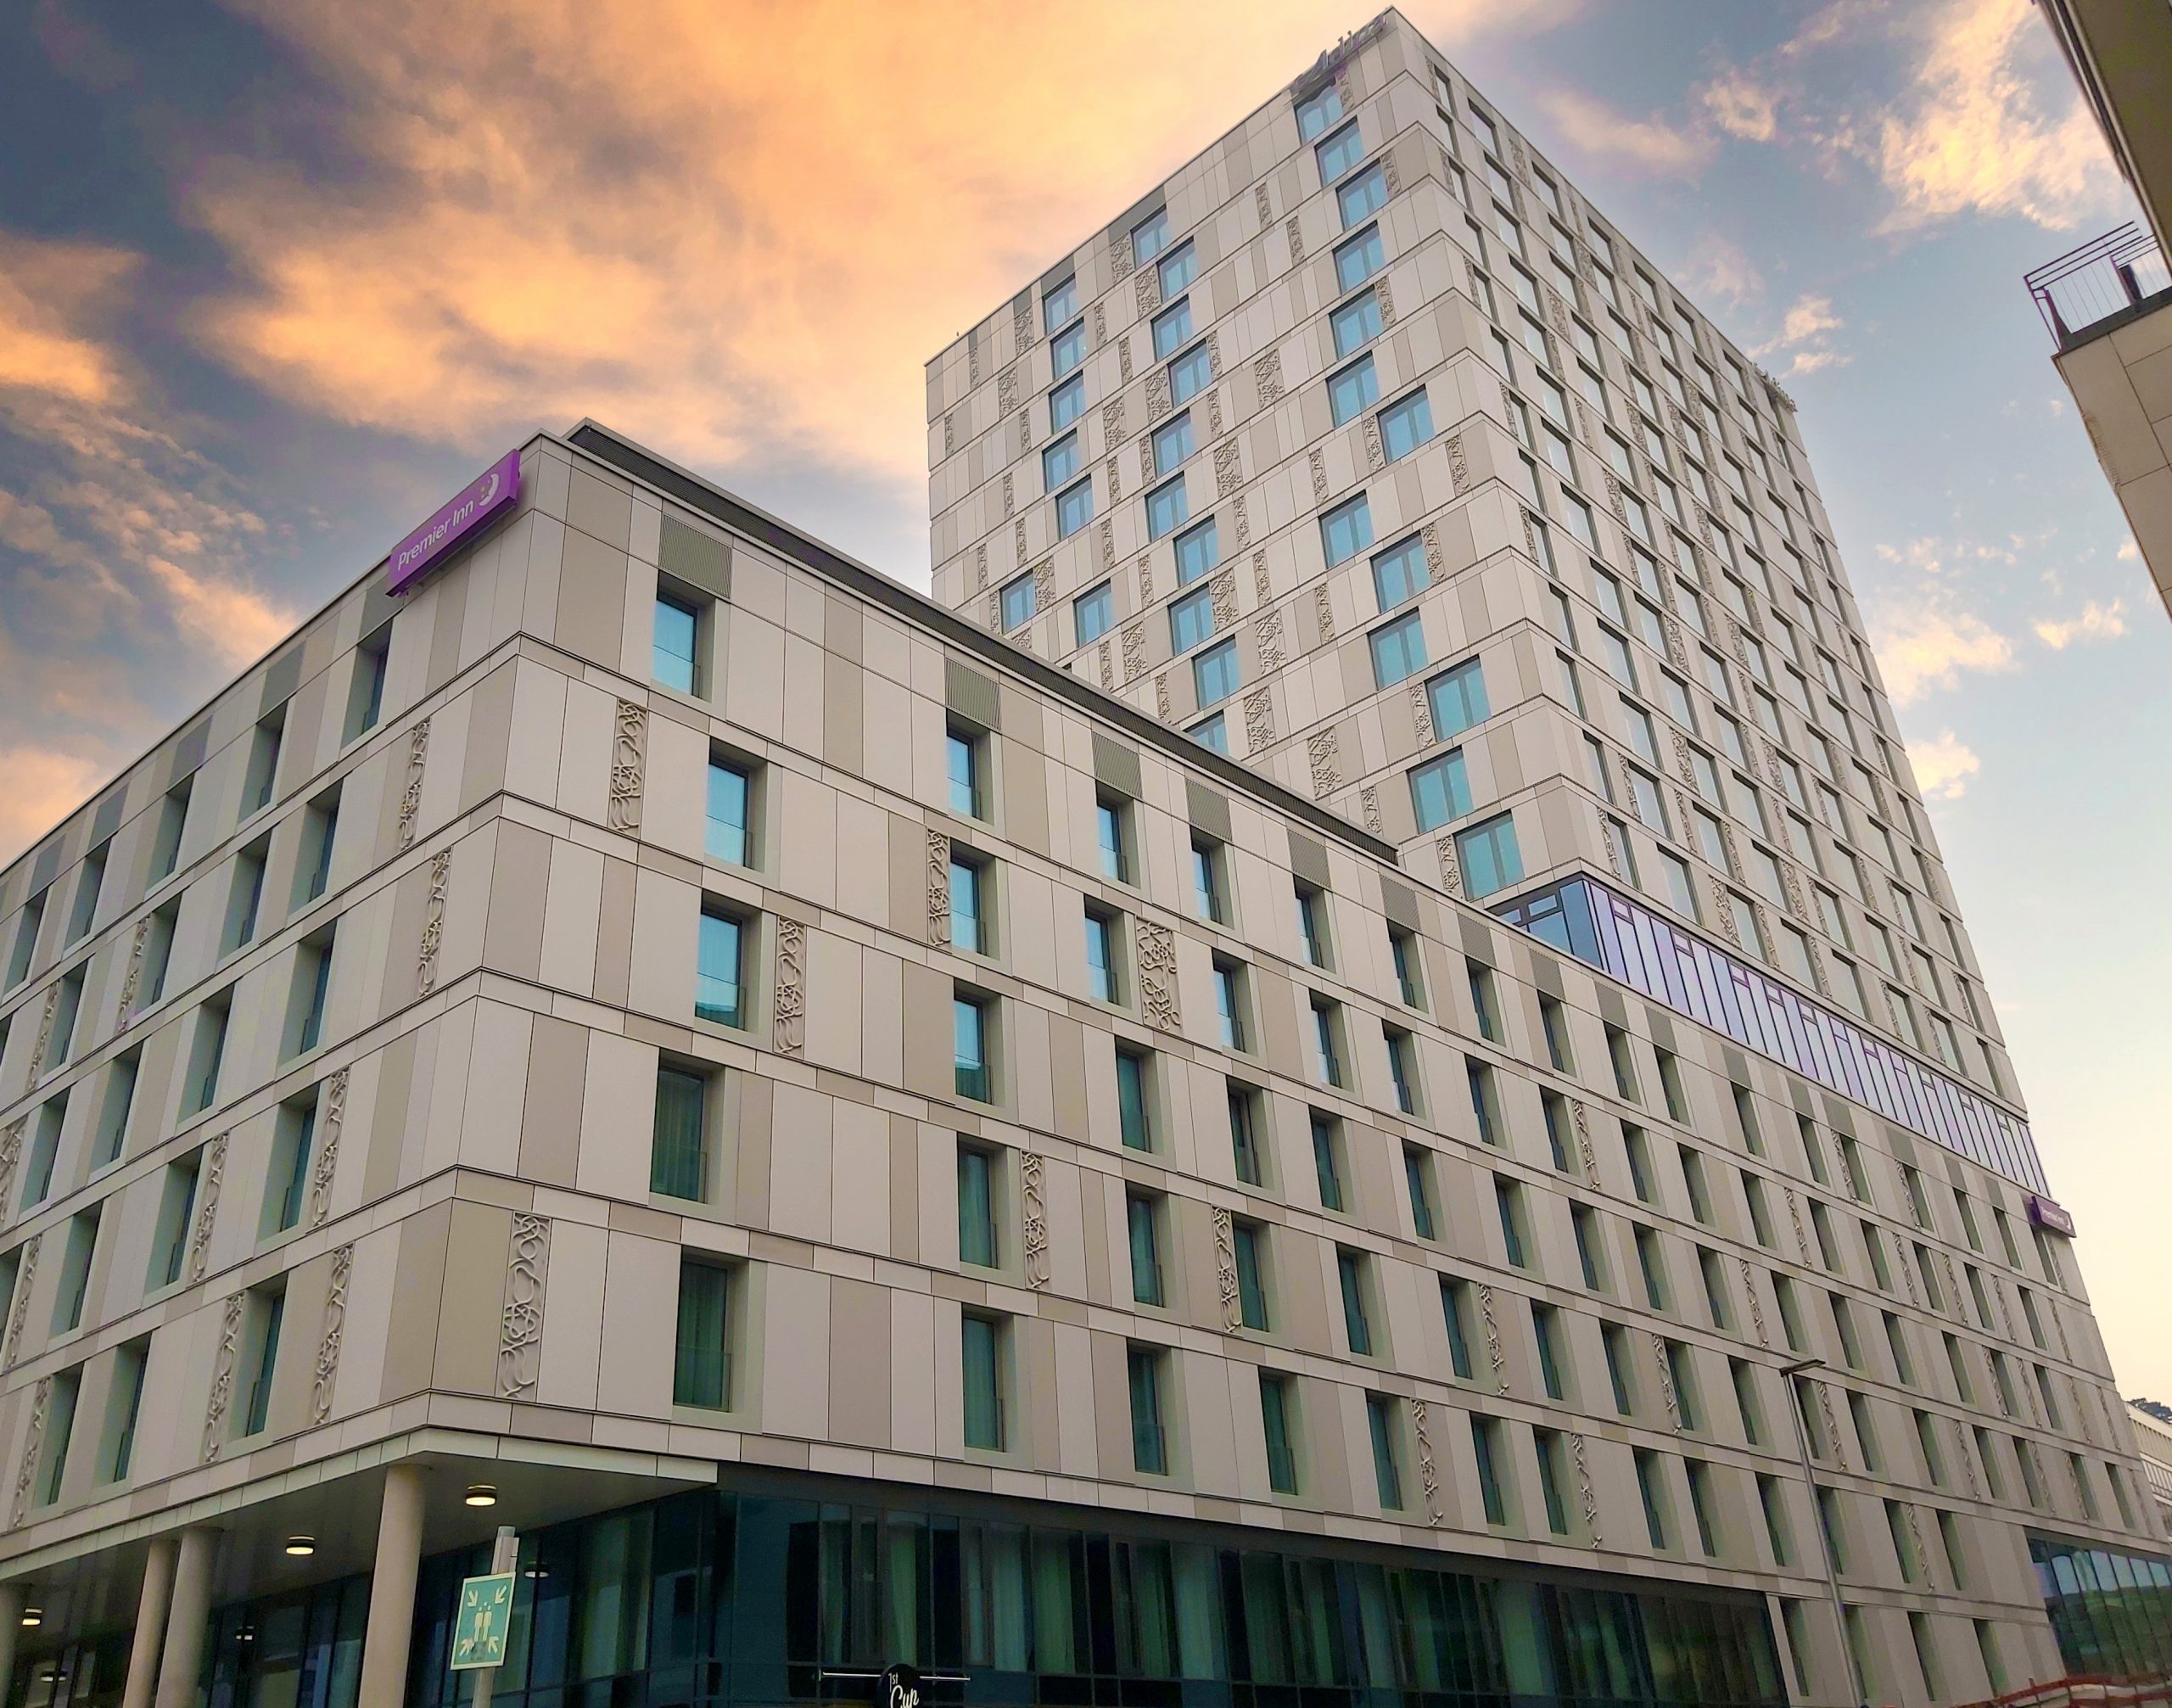 Premier Inn eröffnet viertes Hotel in Stuttgart